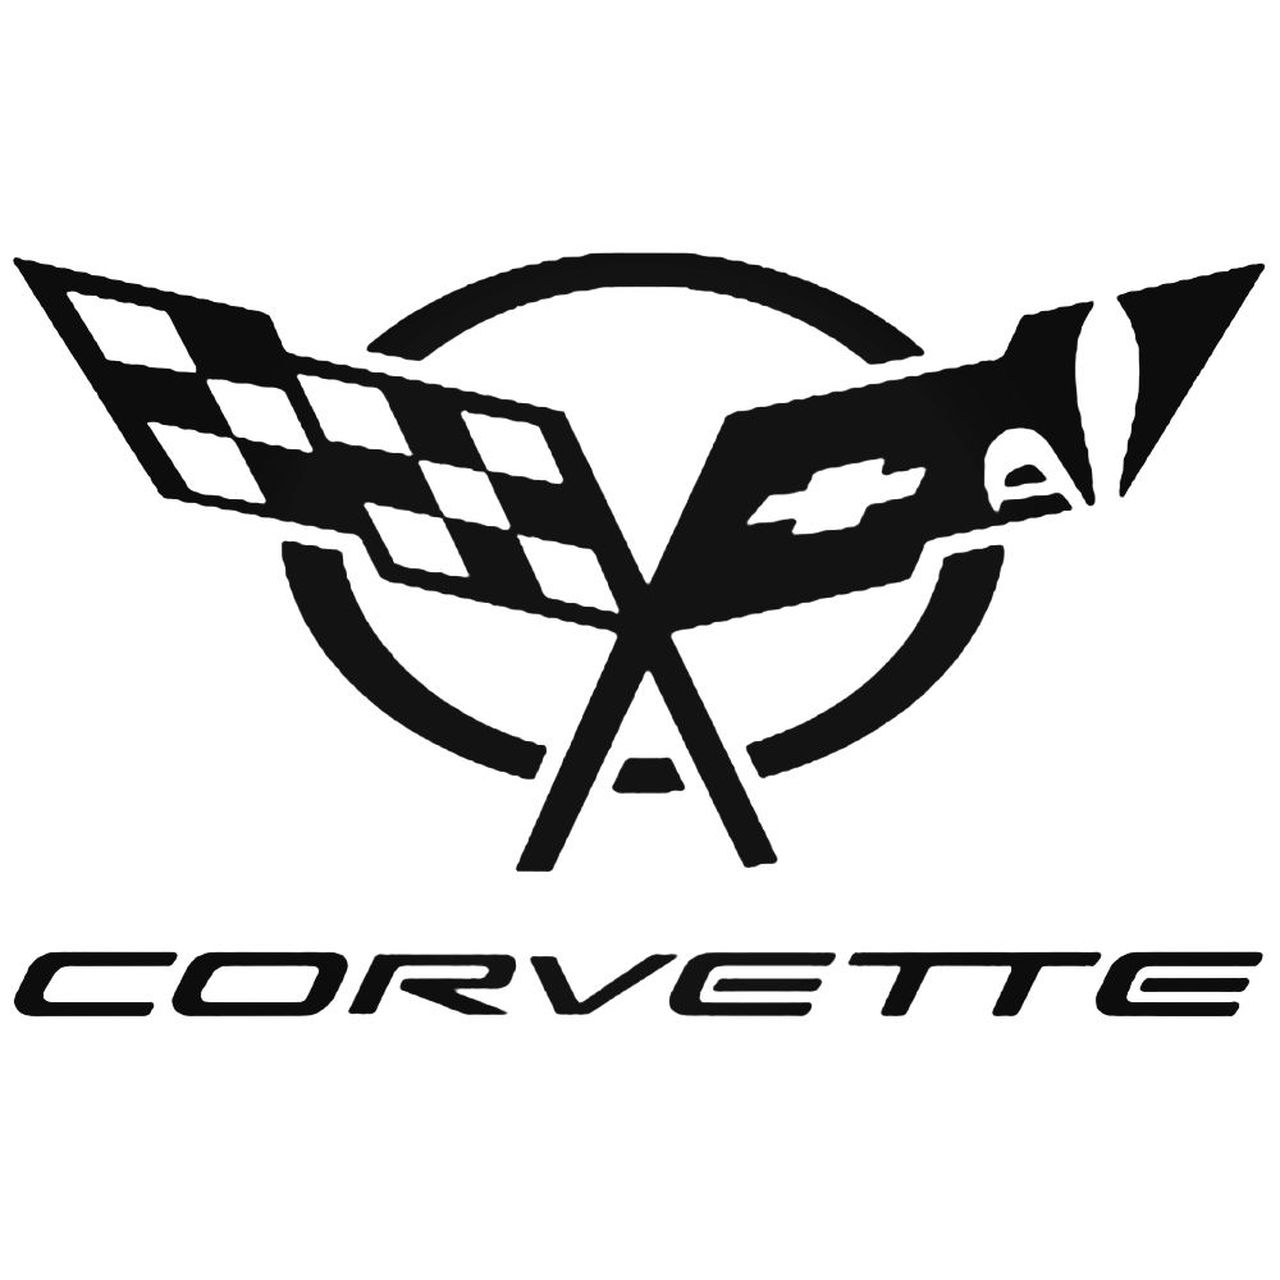 Corvette Vector At Vectorified Com Collection Of Corvette Vector Free